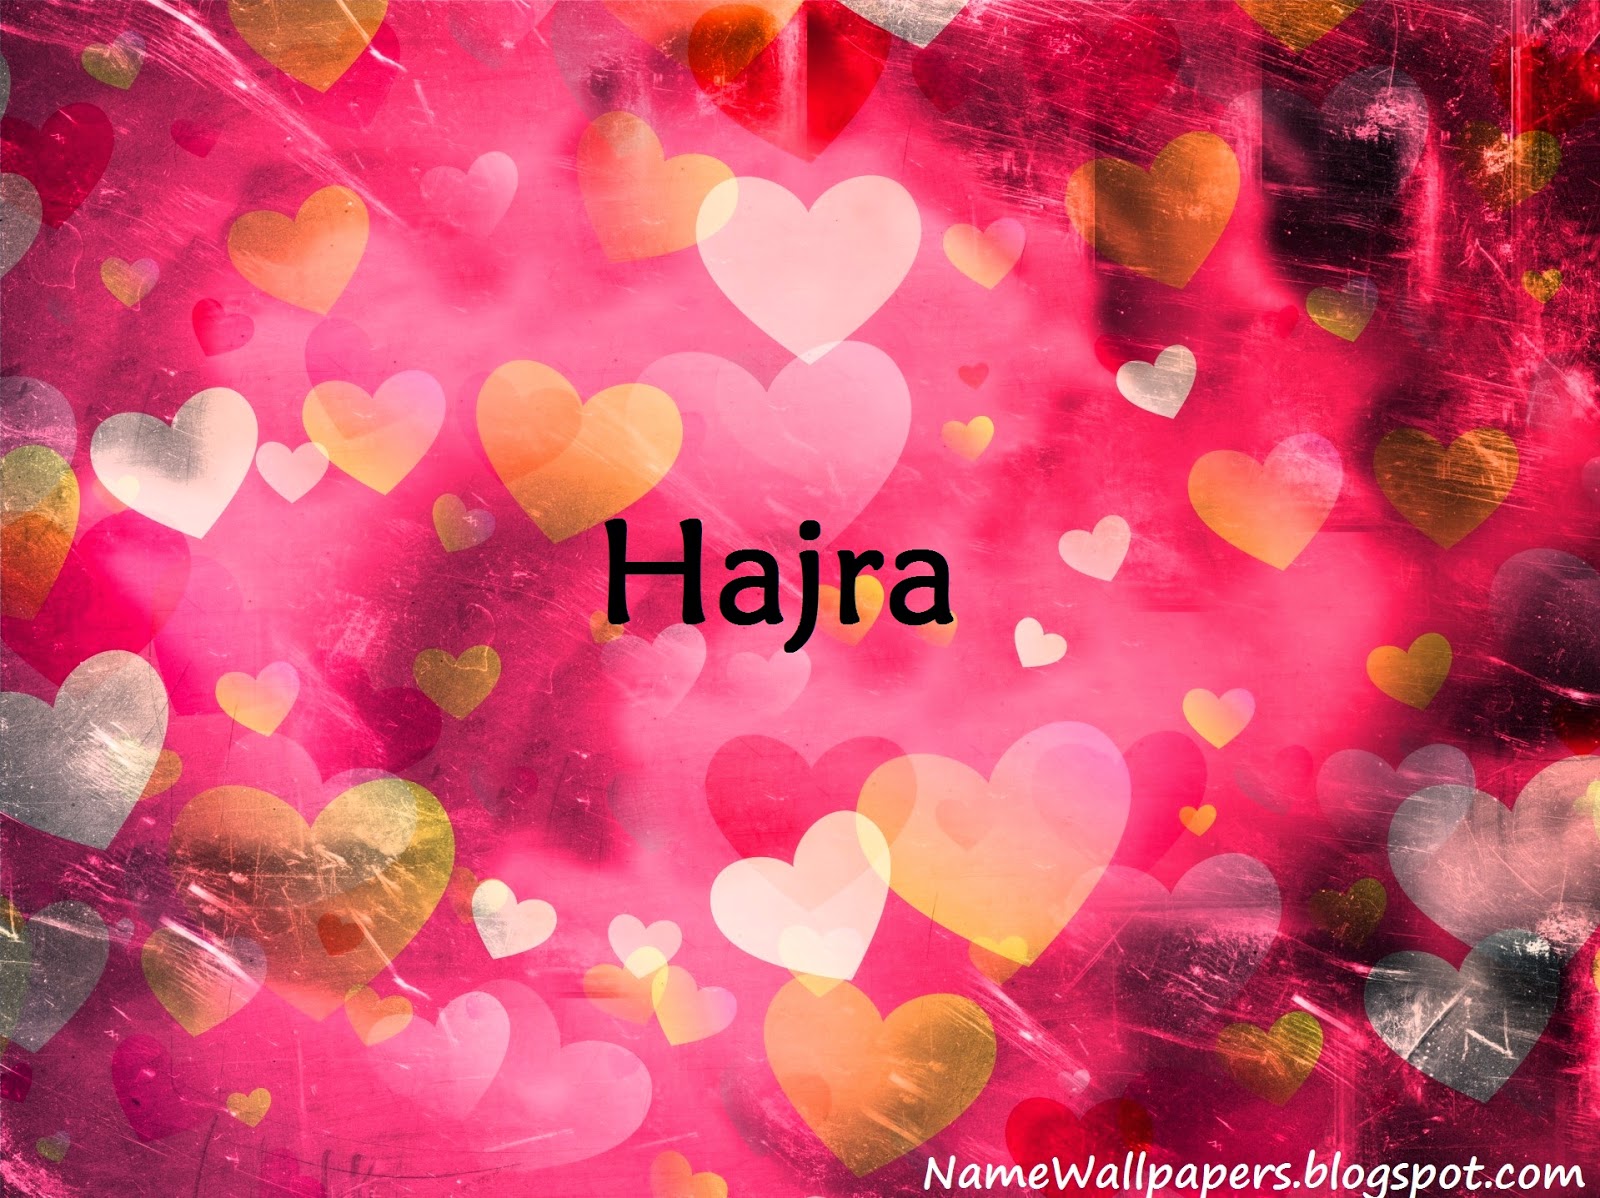 hajra 이름 벽지,심장,분홍,발렌타인 데이,사랑,무늬